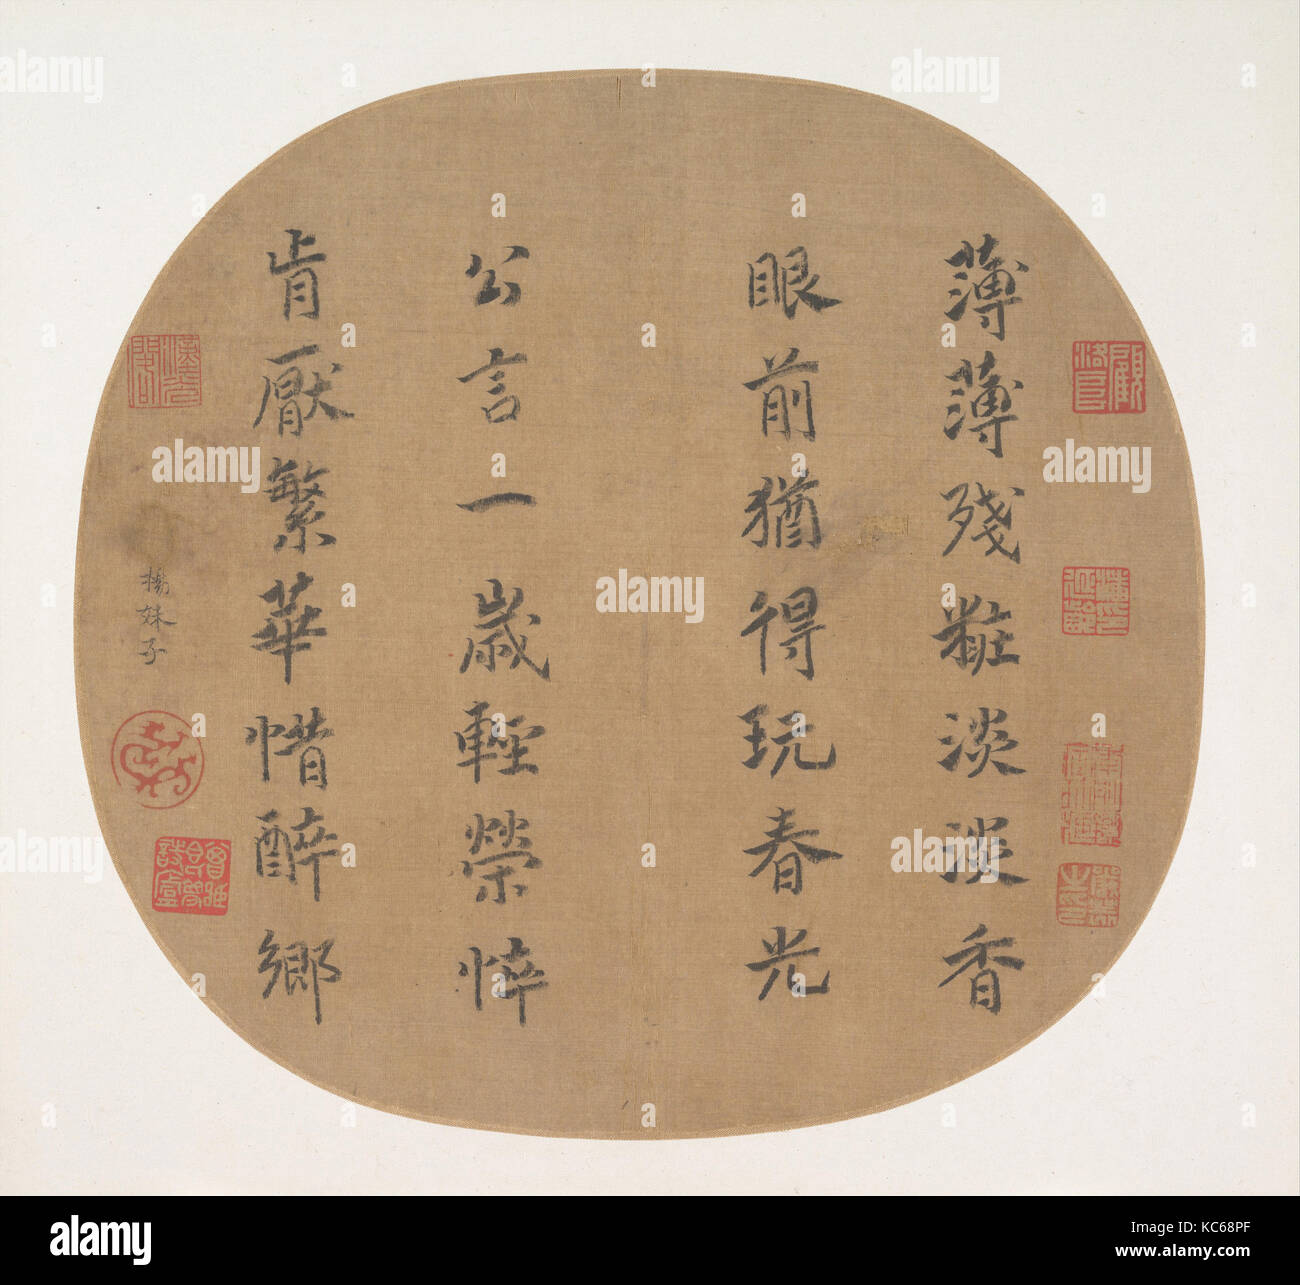 南宋 楊皇后 楷書薄薄殘妝七絕 團扇冊頁 絹本, Quatrain on spring’s radiance, Empress Yang Meizi, early 13th century Stock Photo